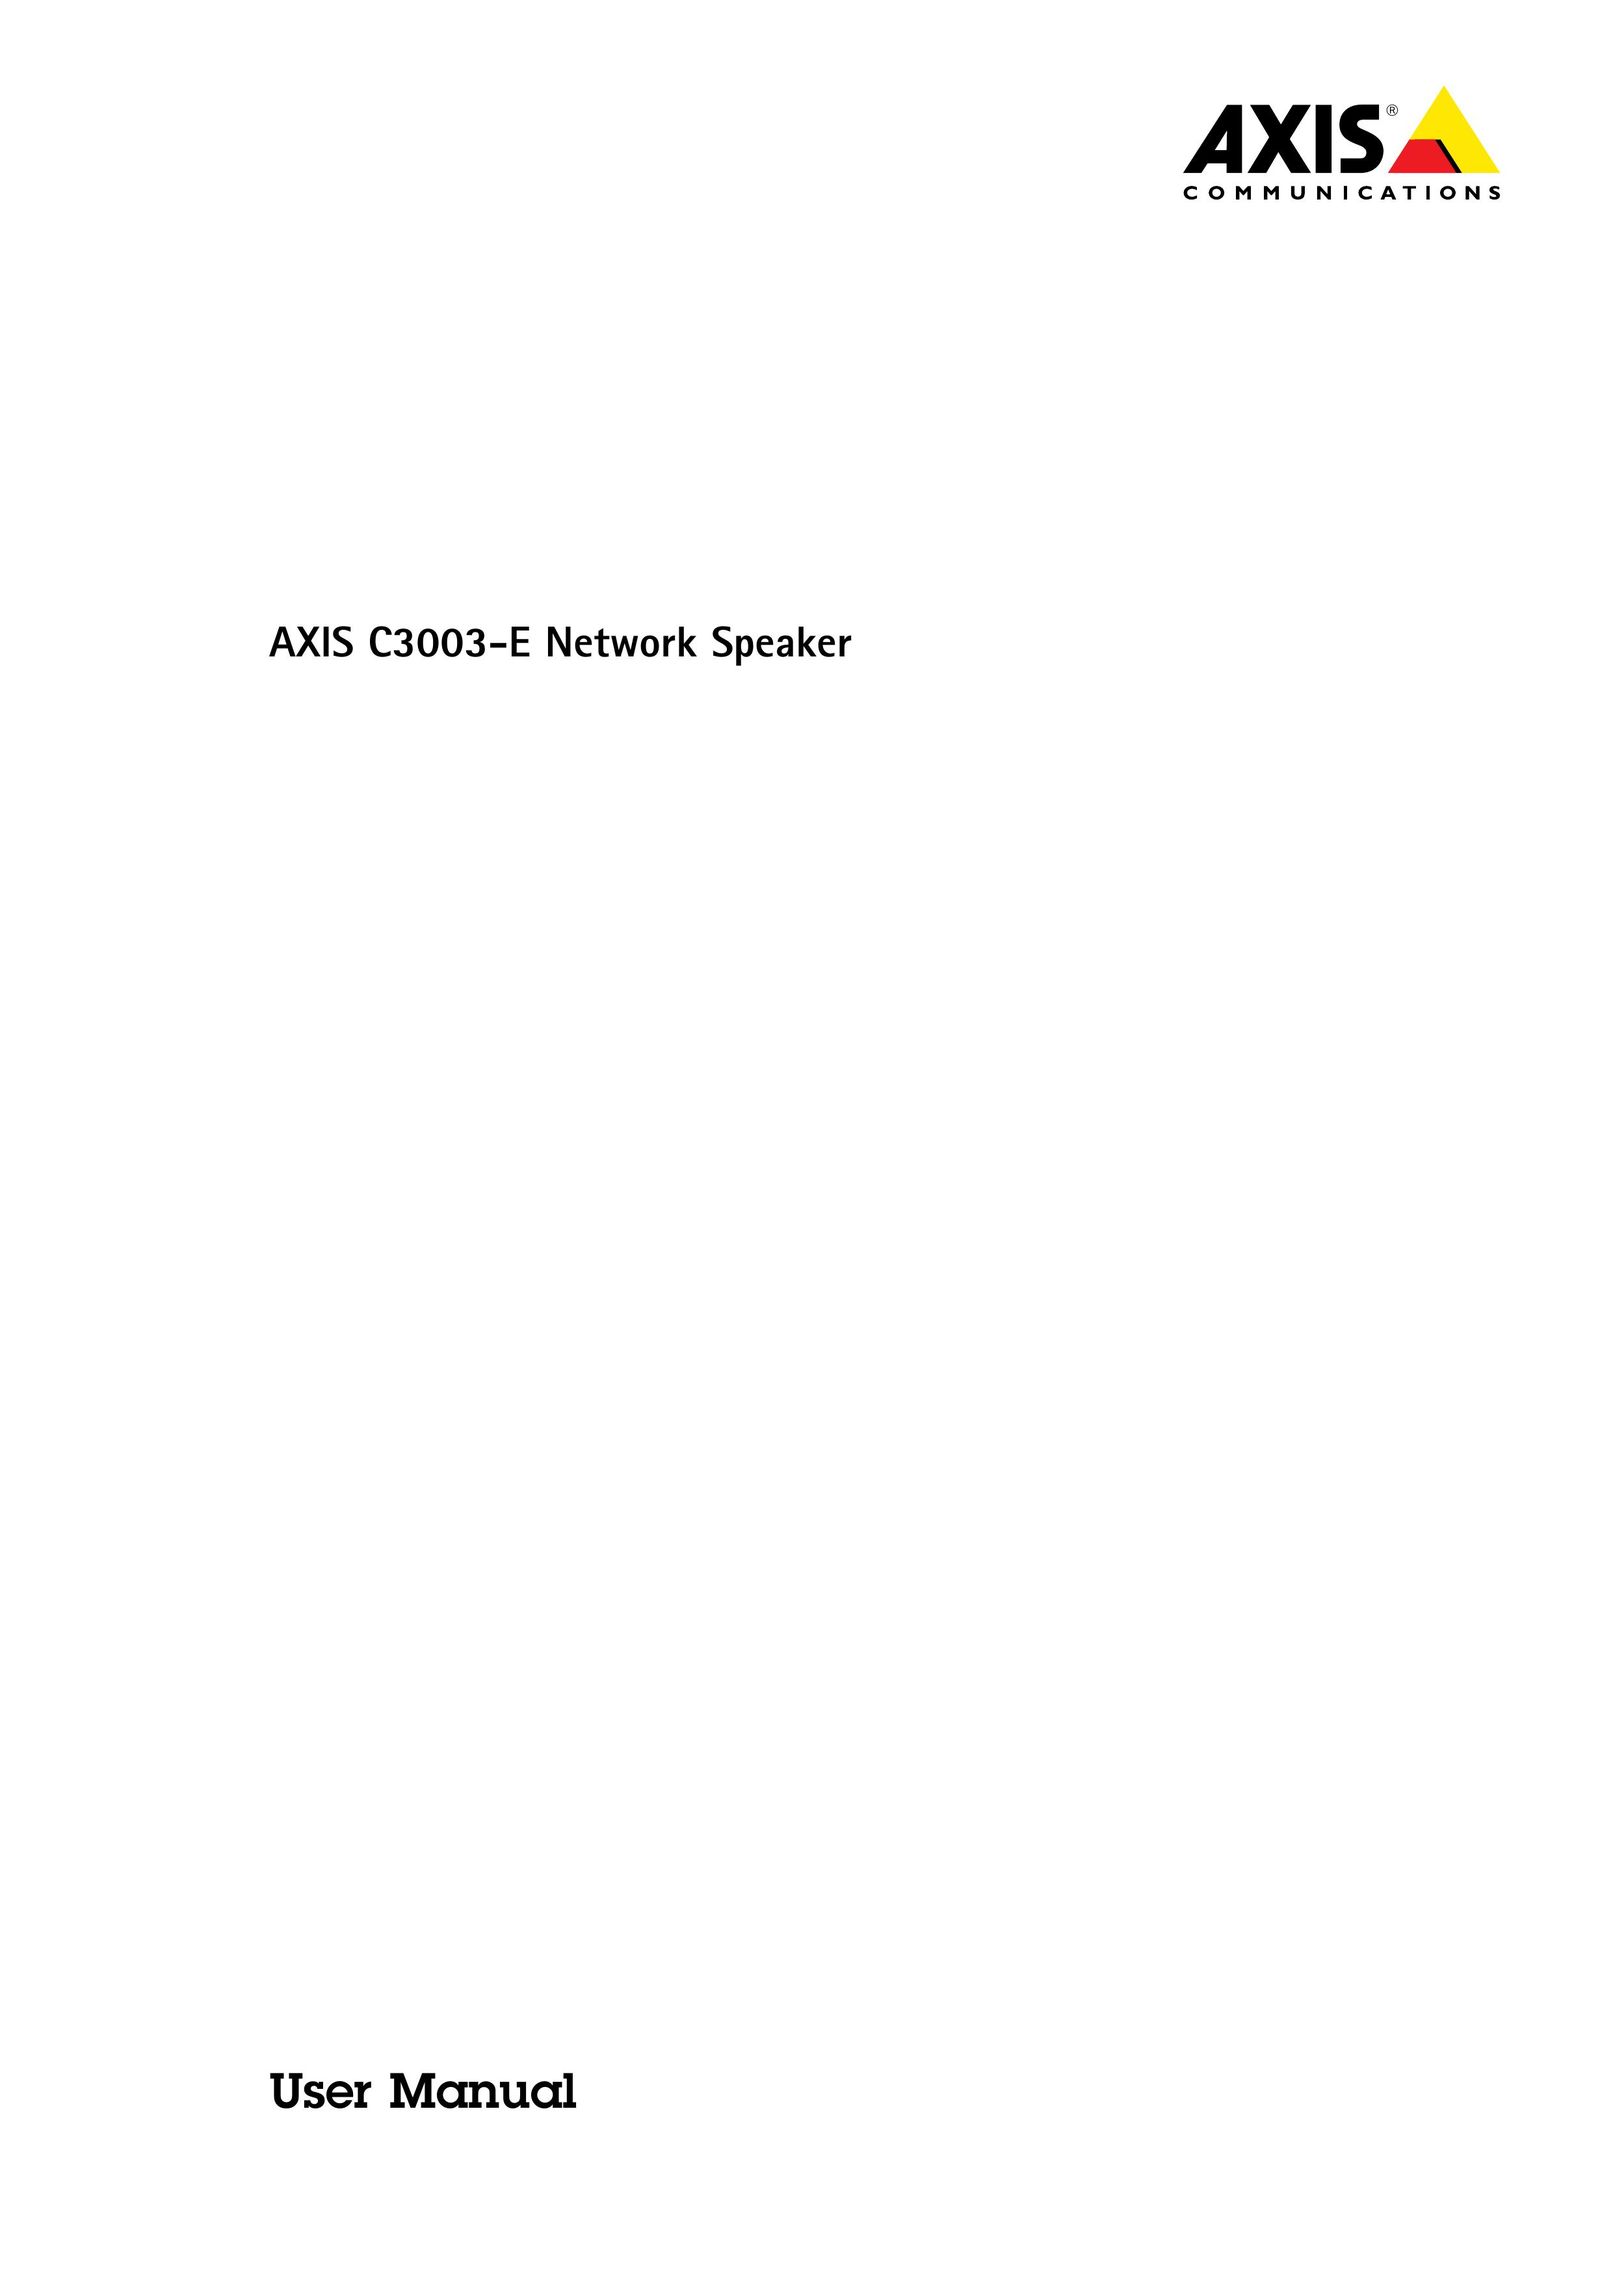 Axis Communications C3003-E Car Speaker User Manual